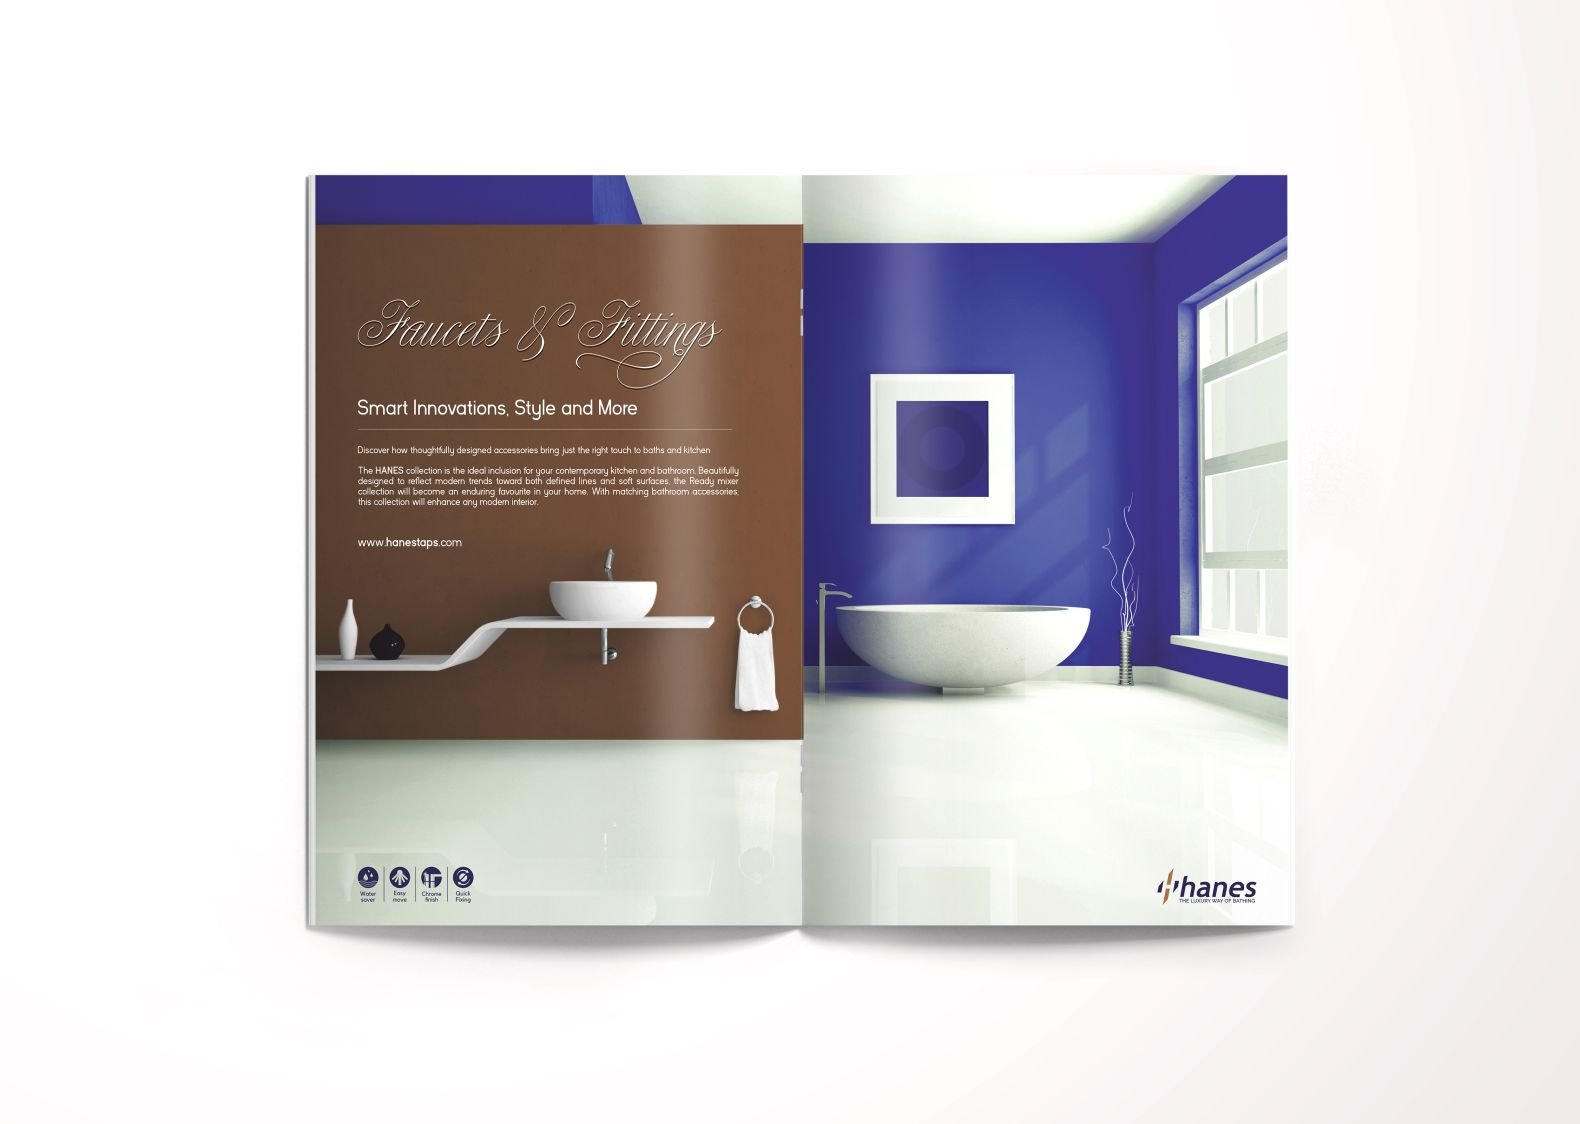 Hanes Catalogue Design - Spartan Branding Agency